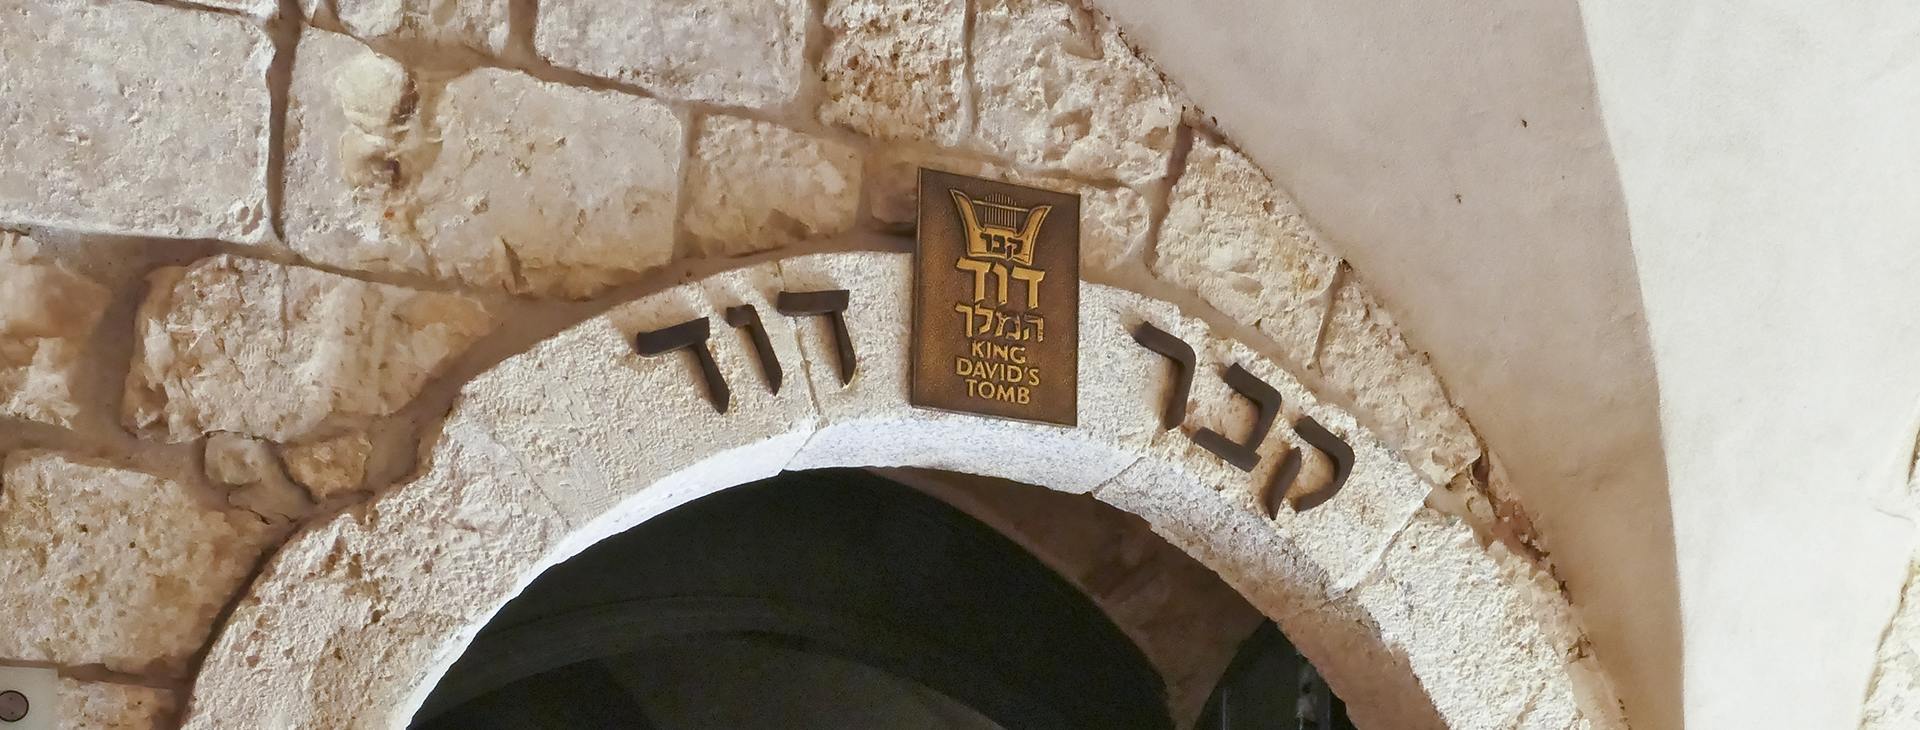 Tomb of King David, Mount Zion